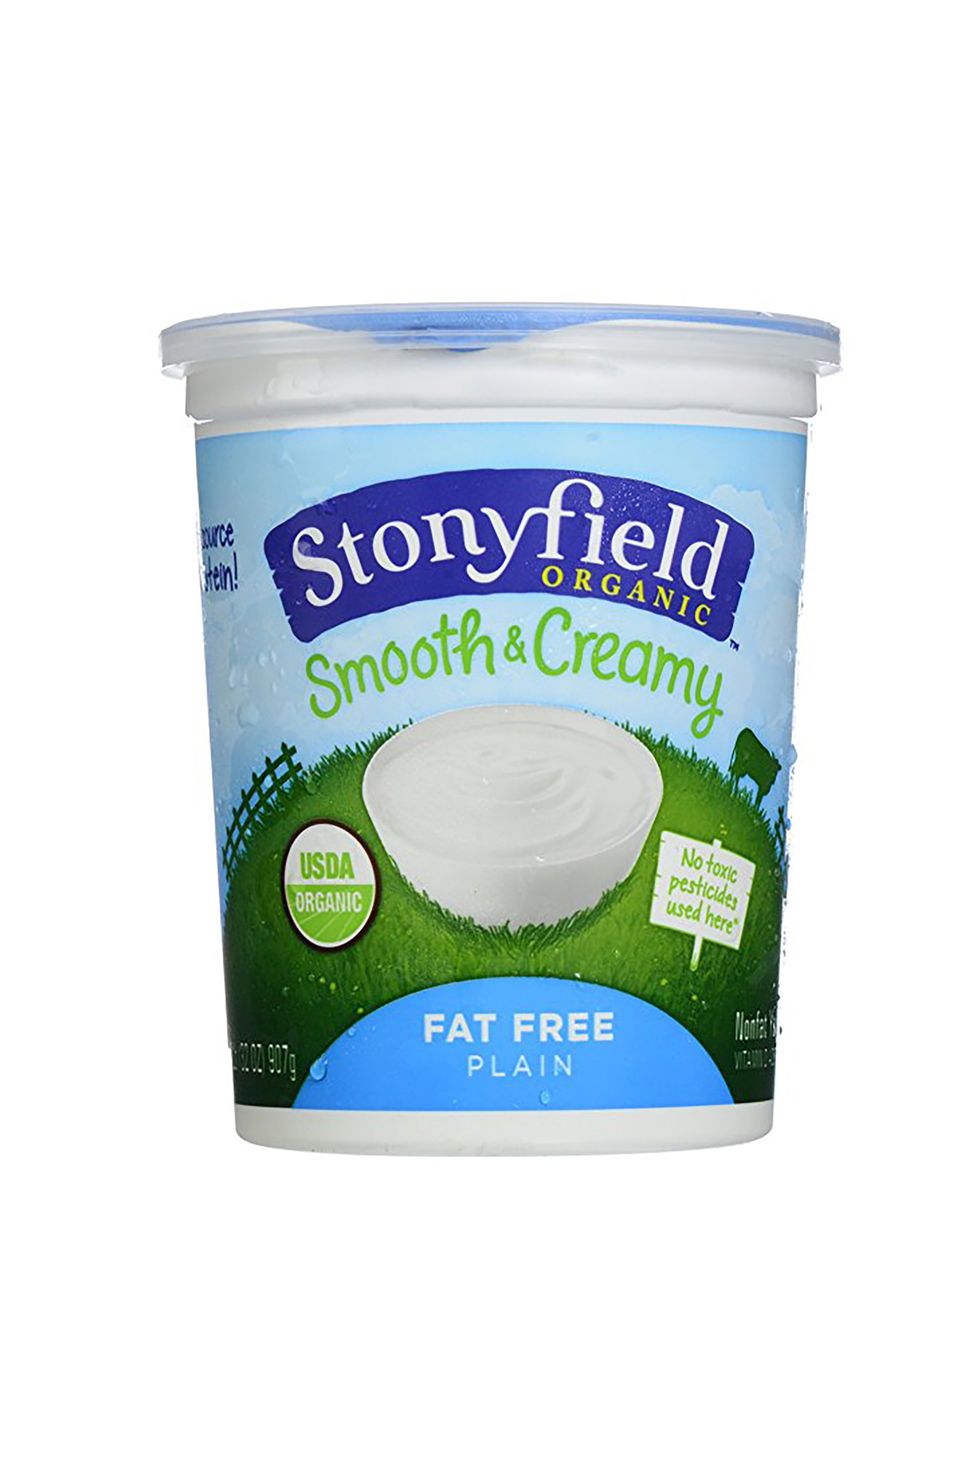 stonyfield yogurt best yogurt brands